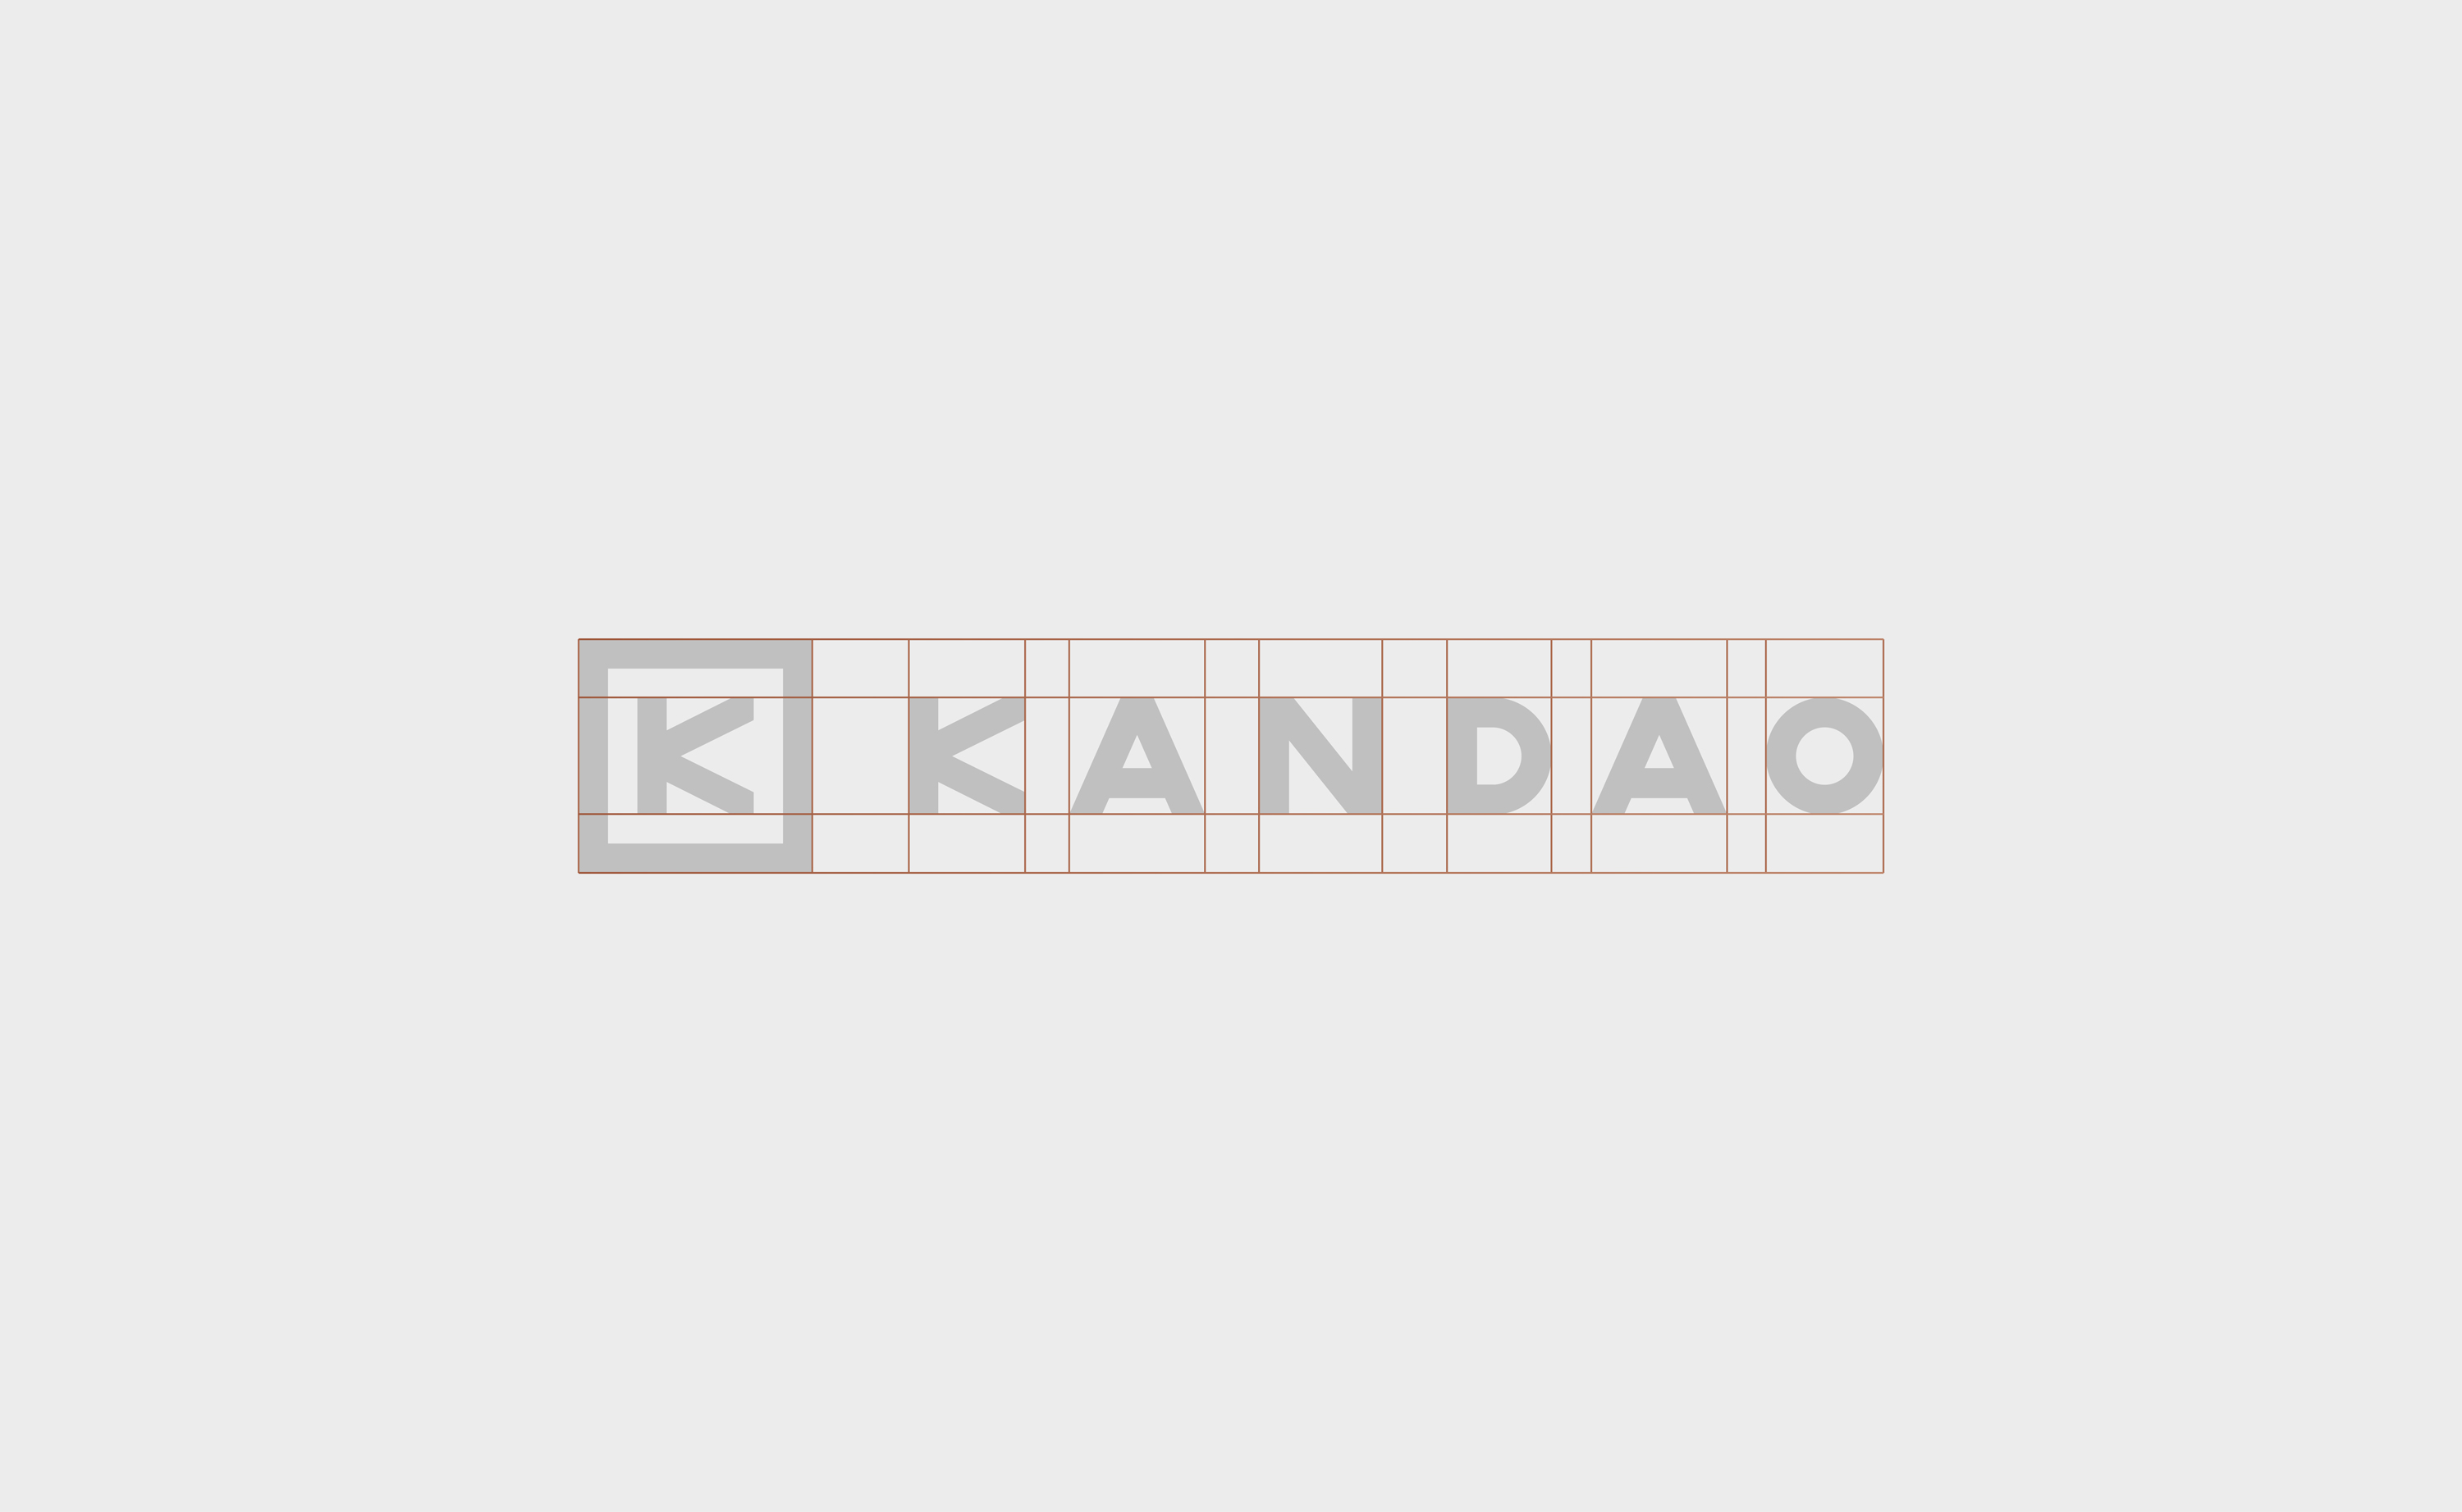 construction du logo pour la marque de caméra kandao